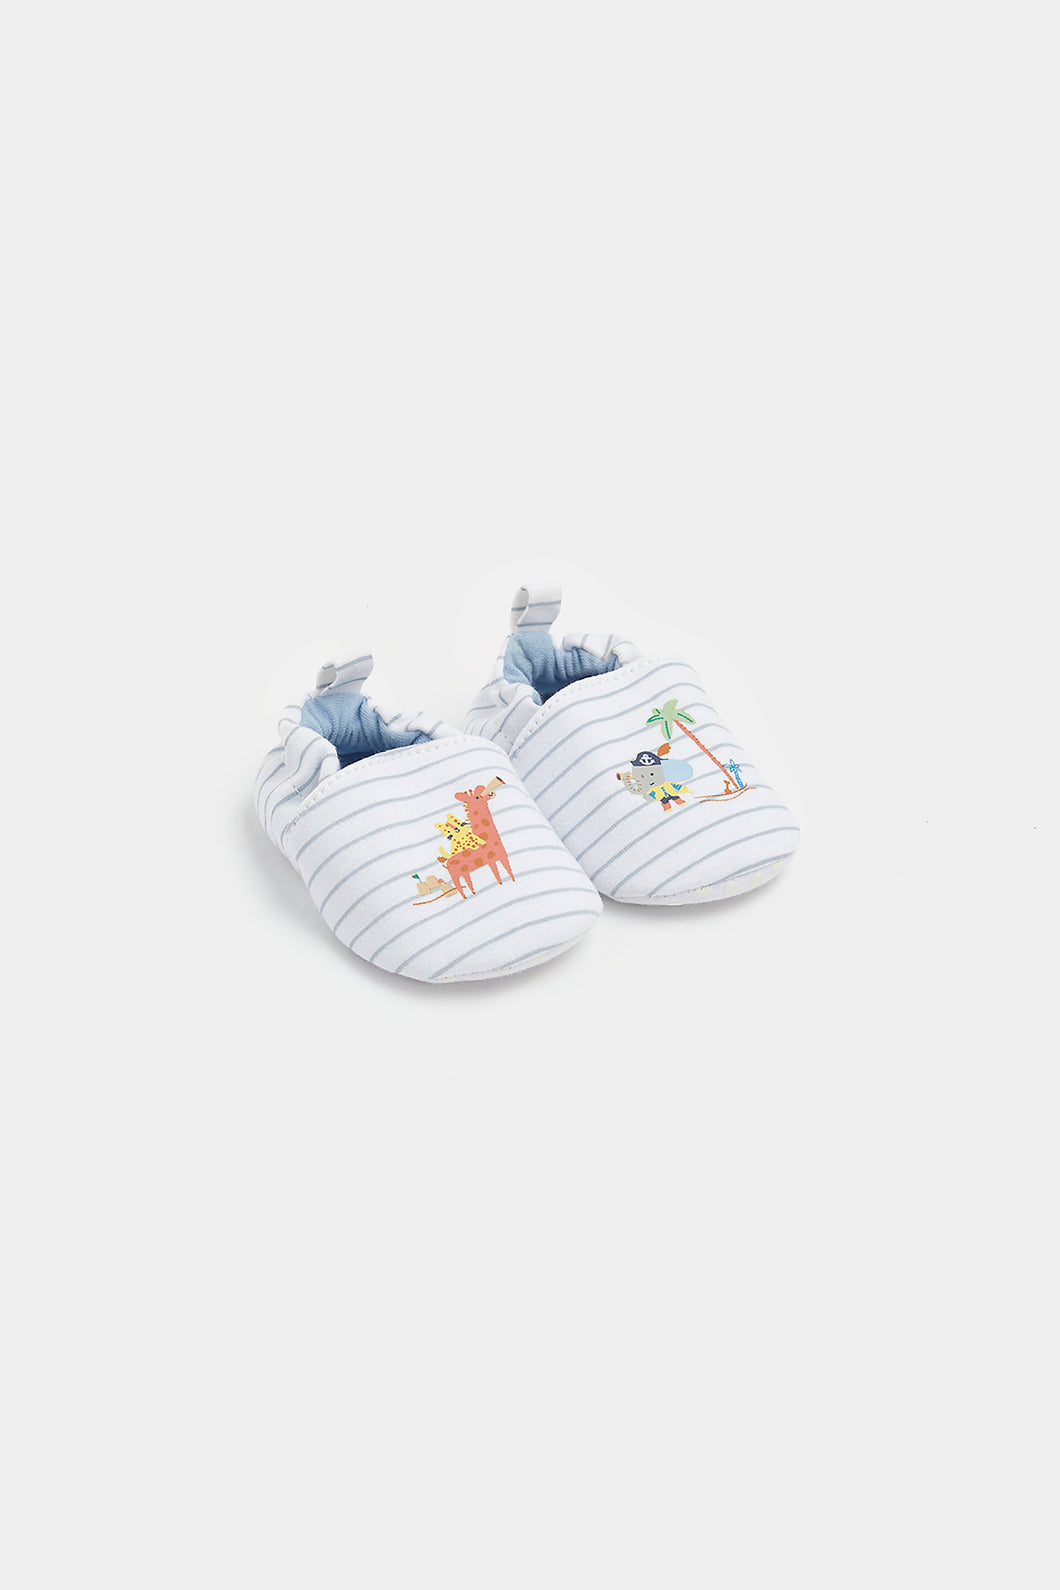 Mothercare Safari Baby Shoes